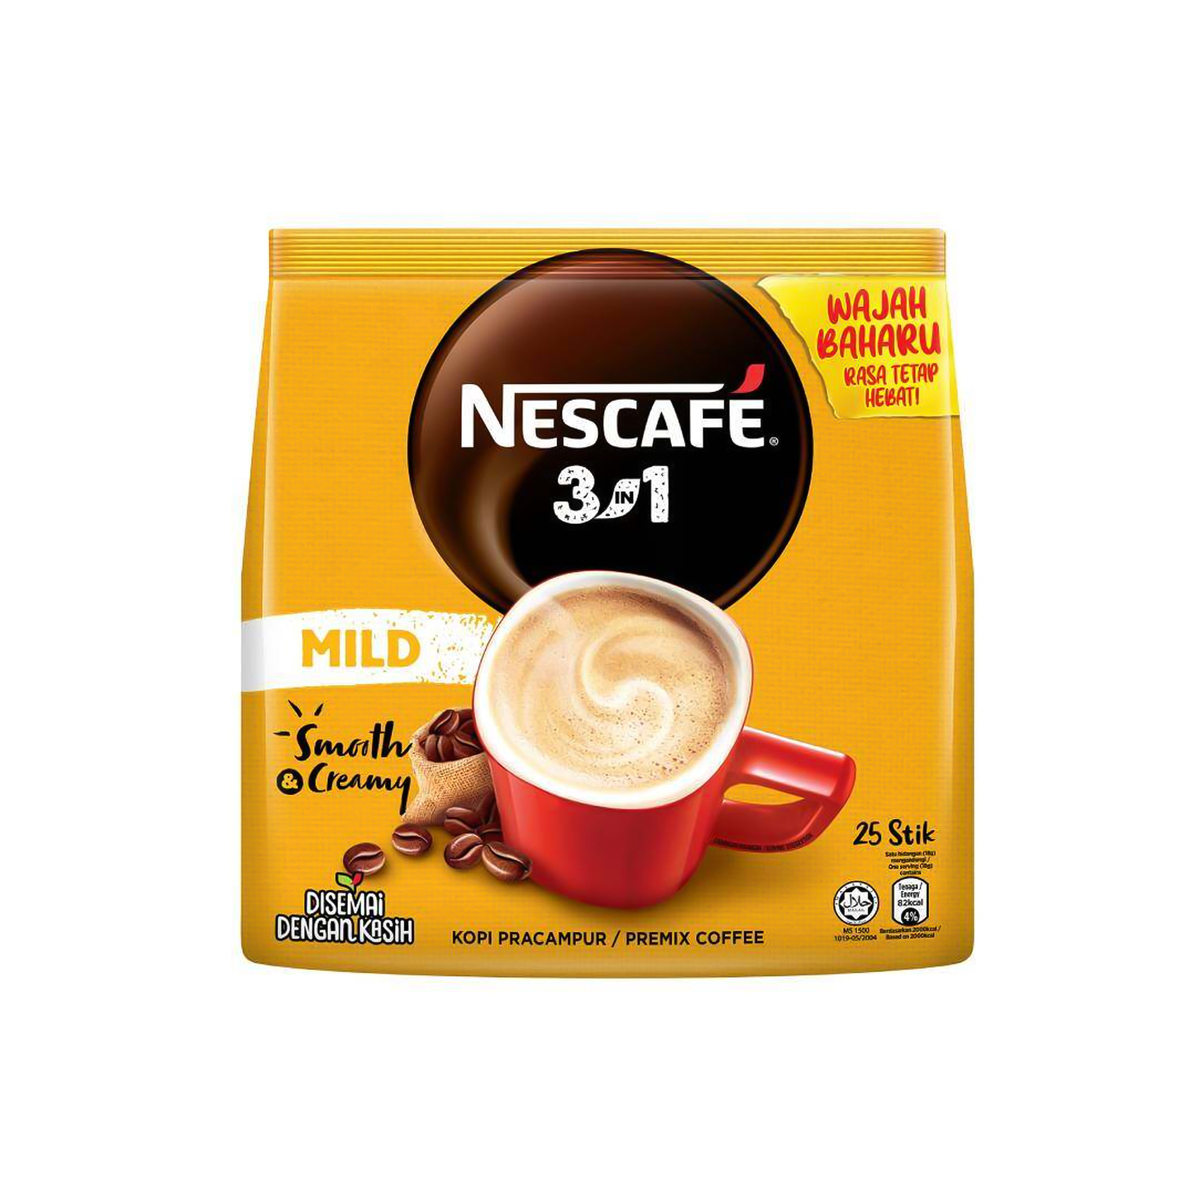 Nescafe 3IN1 Mild 18gx25sticks